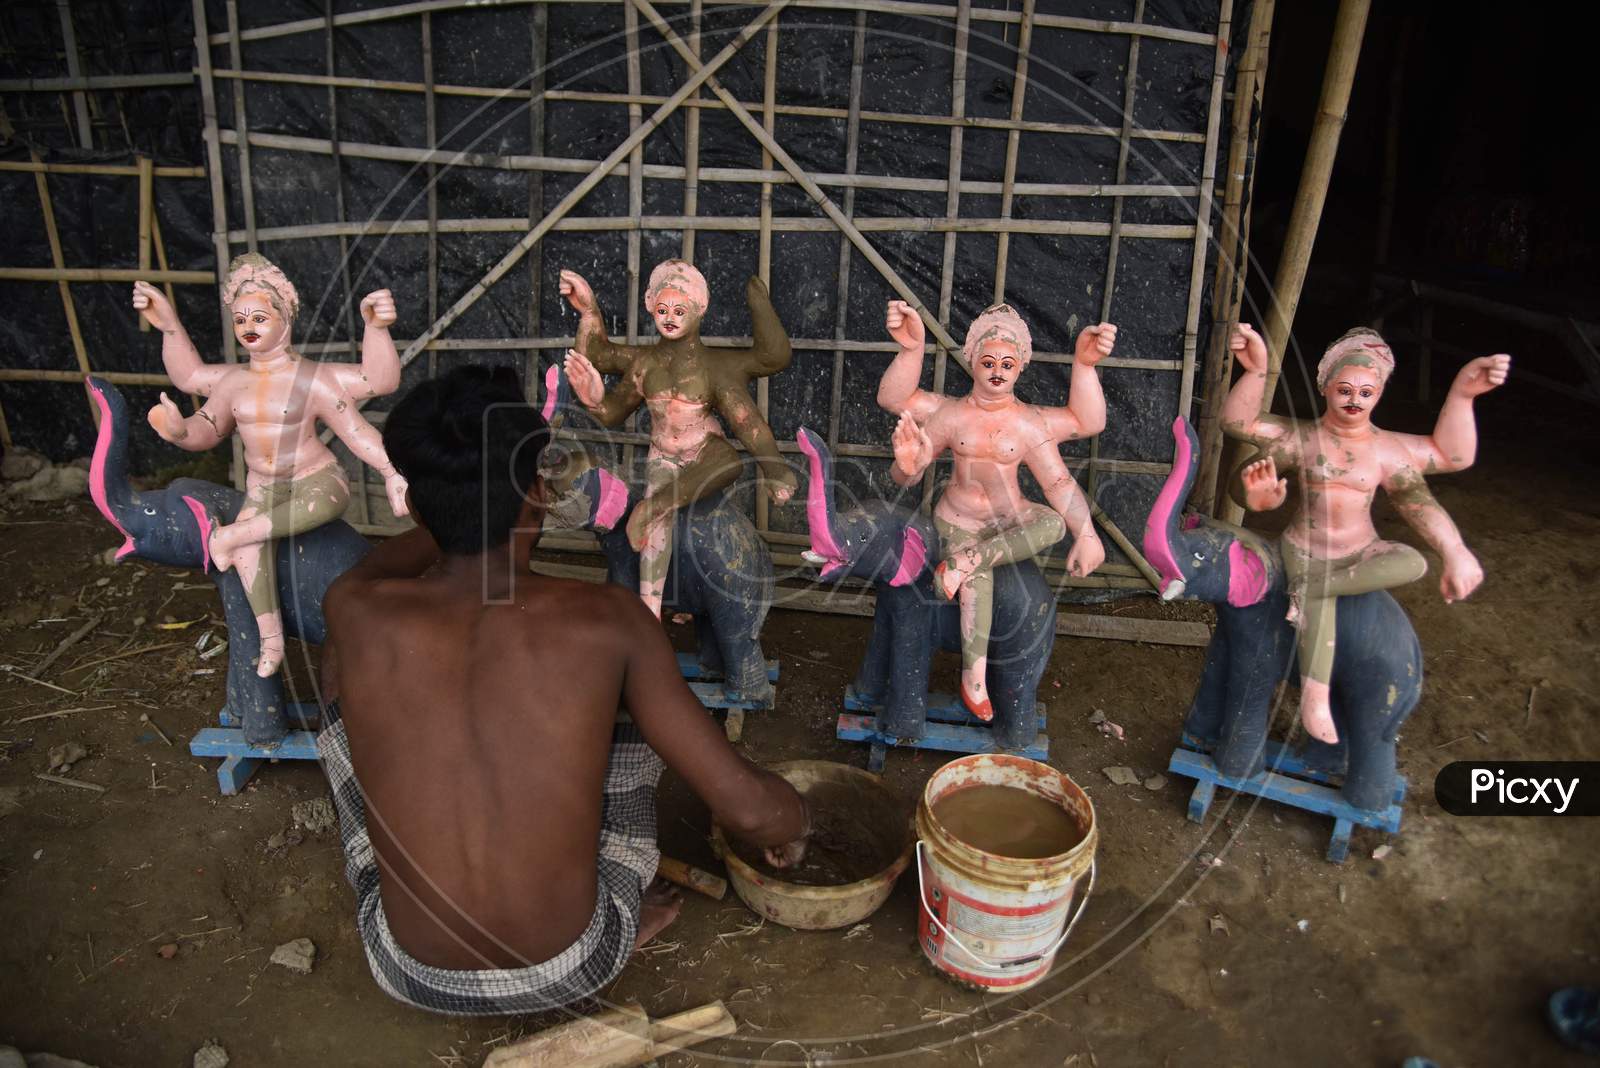 An Artist Is Sculpting The Vishwakarma Idols With Clay Ahead Of Vishwakarma Puja In Nagaon District Of Assam On Sep 07,2020.